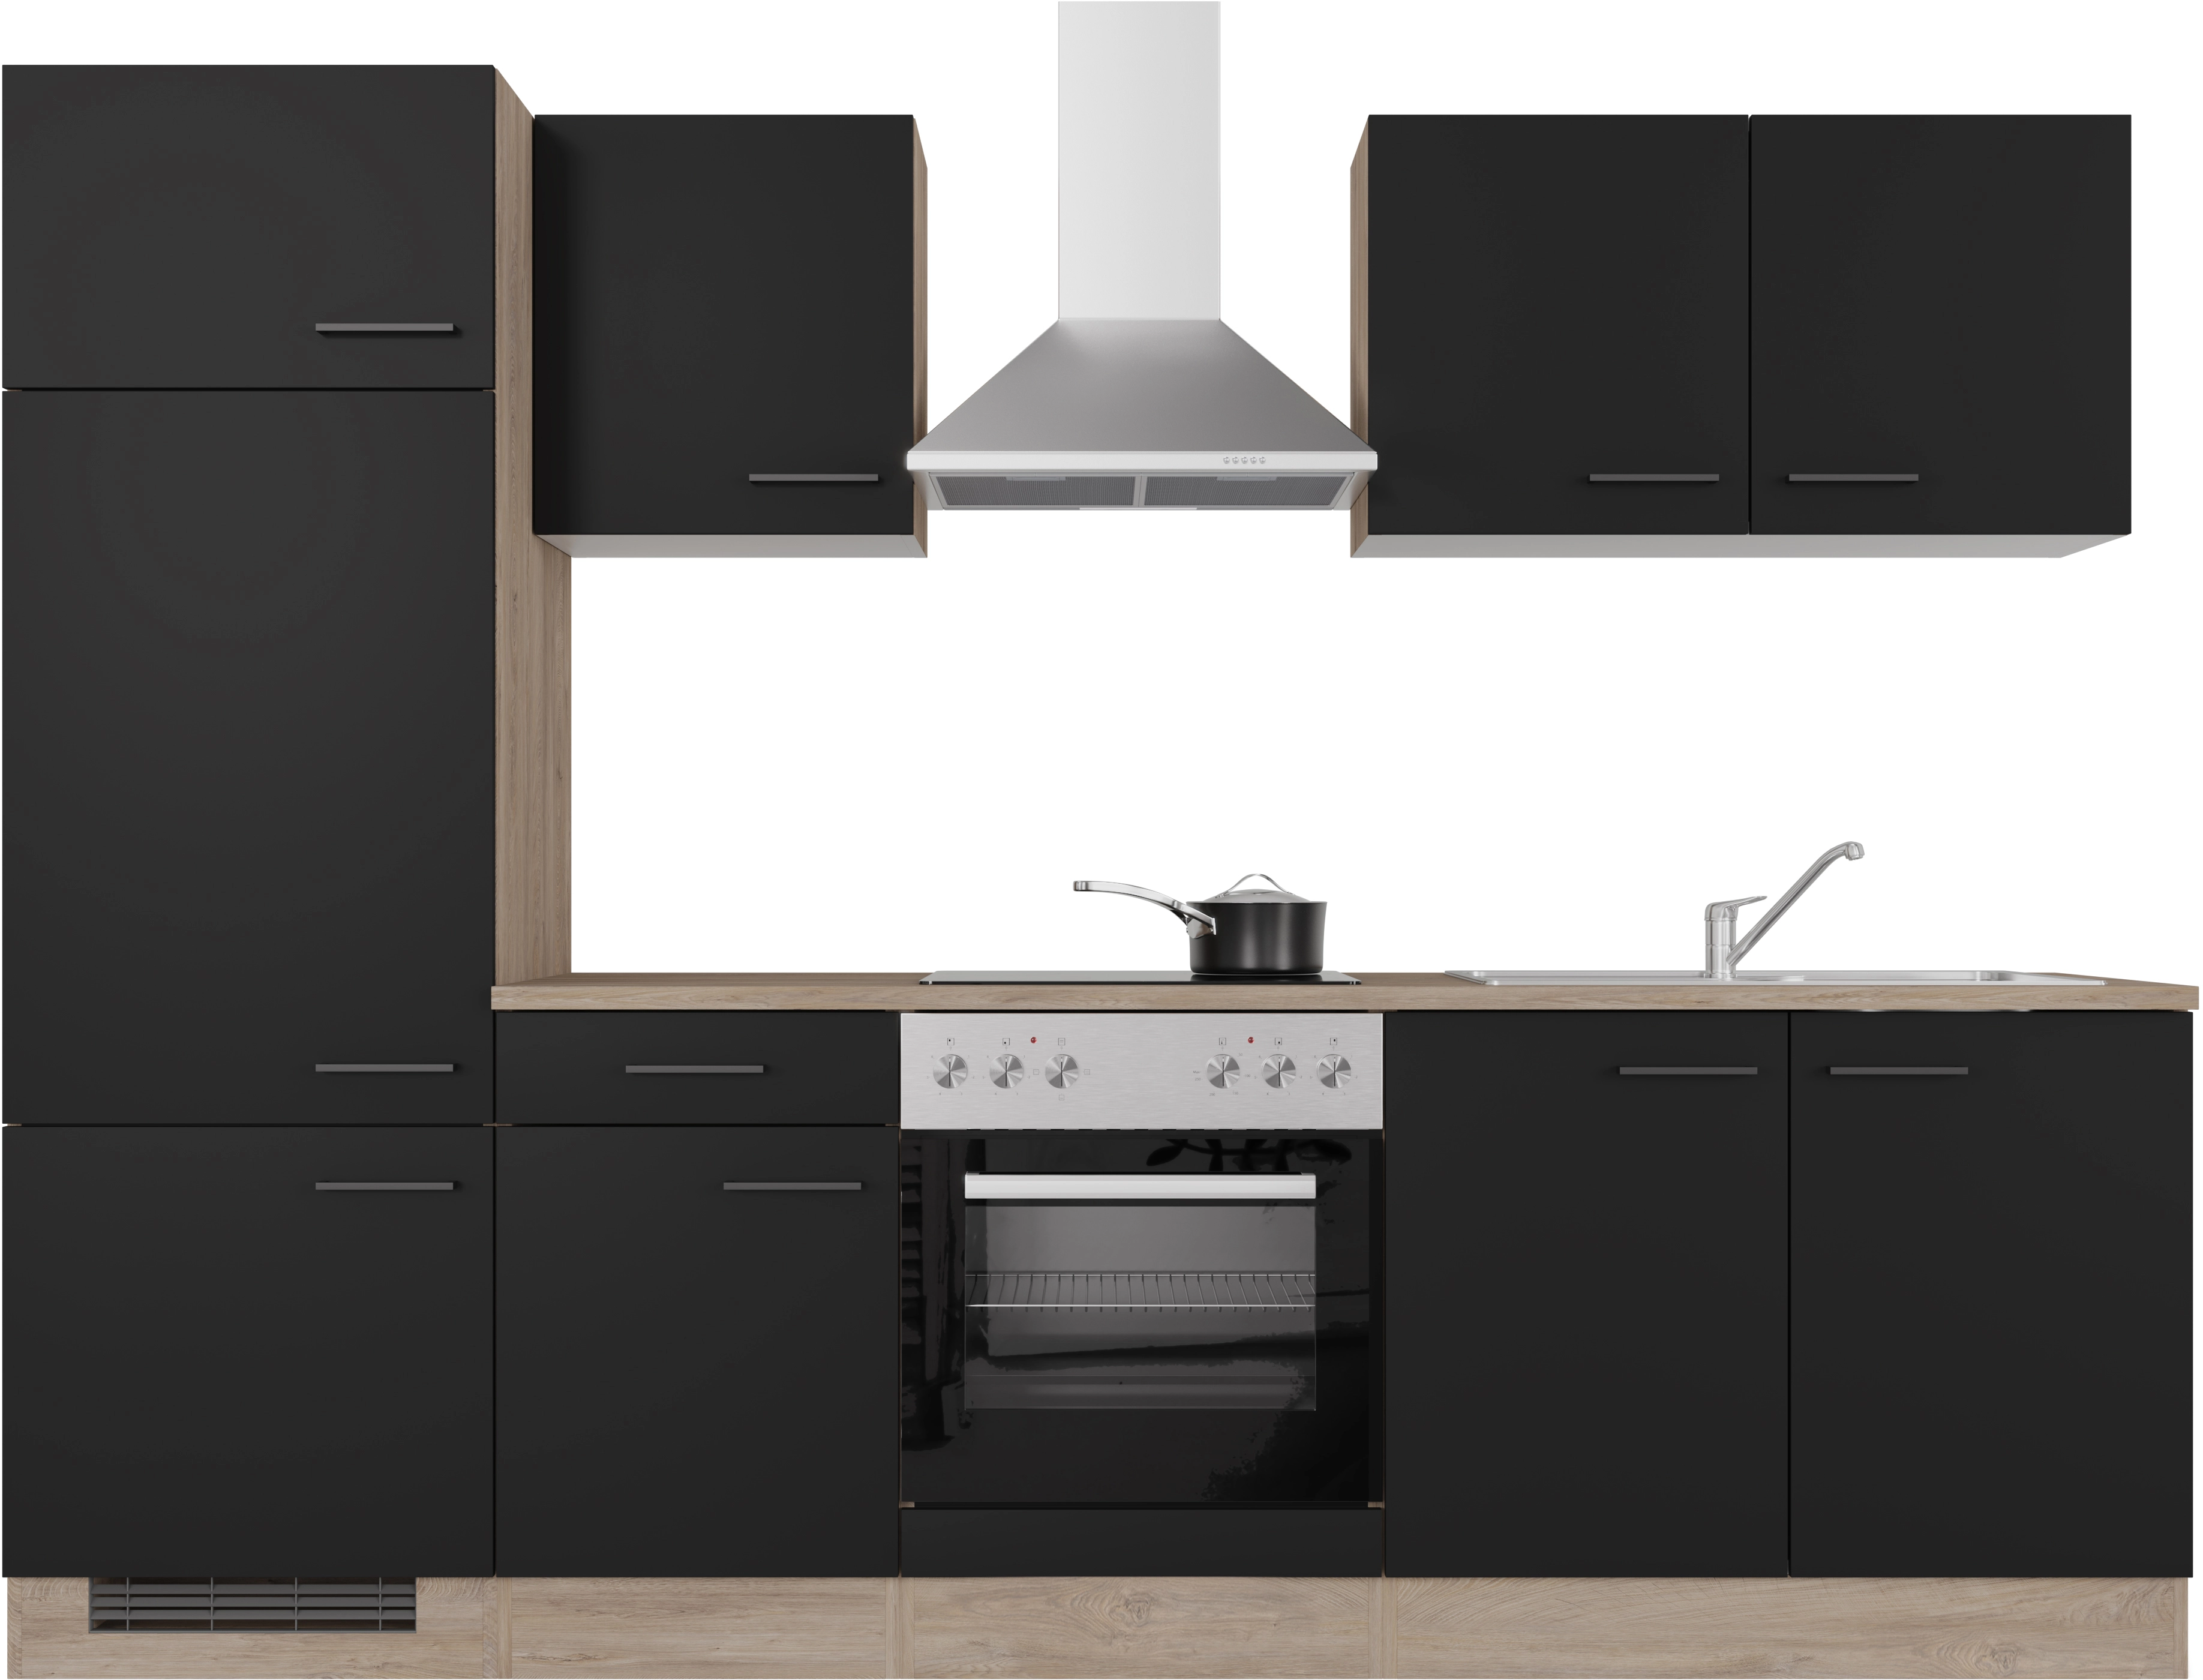 Flex-Well Exclusiv Küchenzeile Capri Schwarz 270 bei Matt-Endgrain OBI kaufen cm Oak